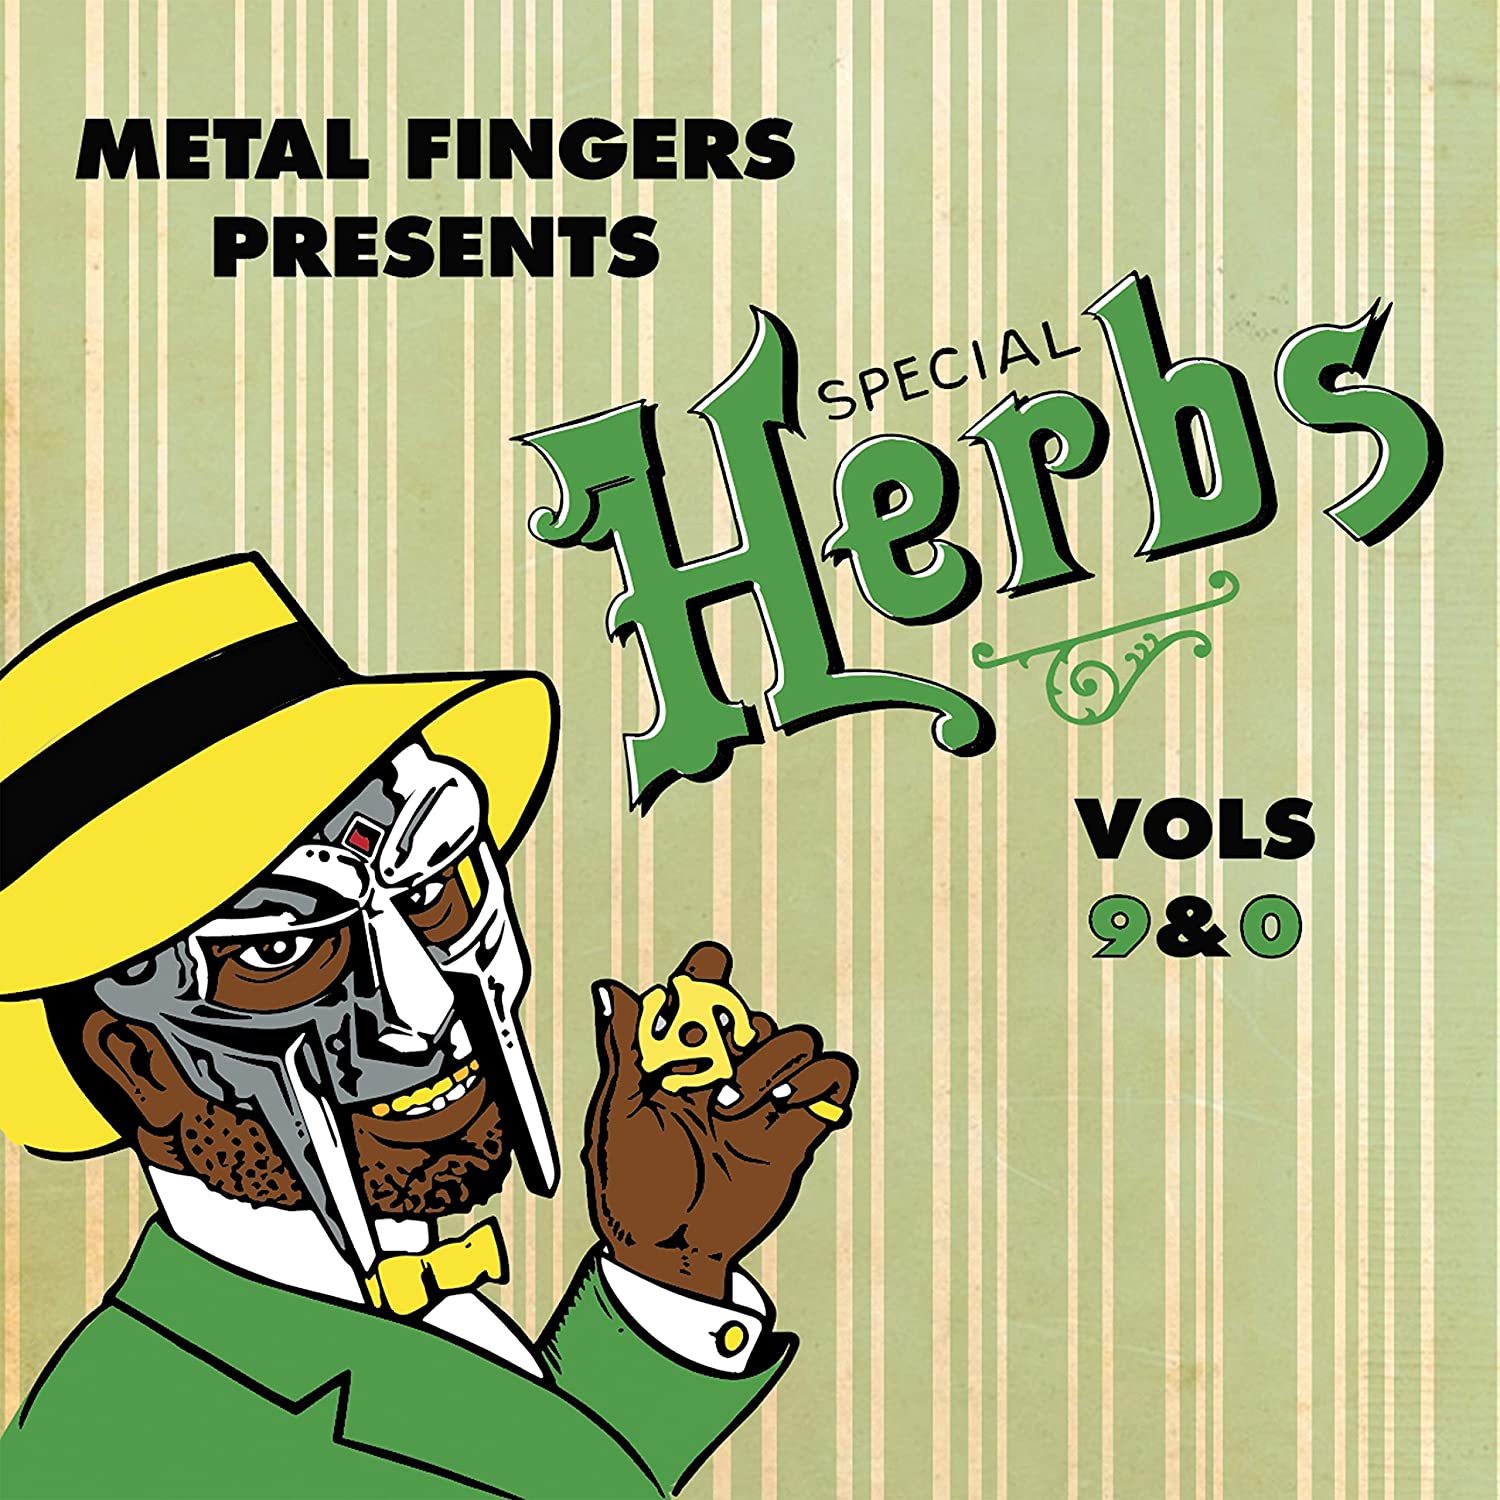 MF Doom - Special Herbs Vol. 9 & 0